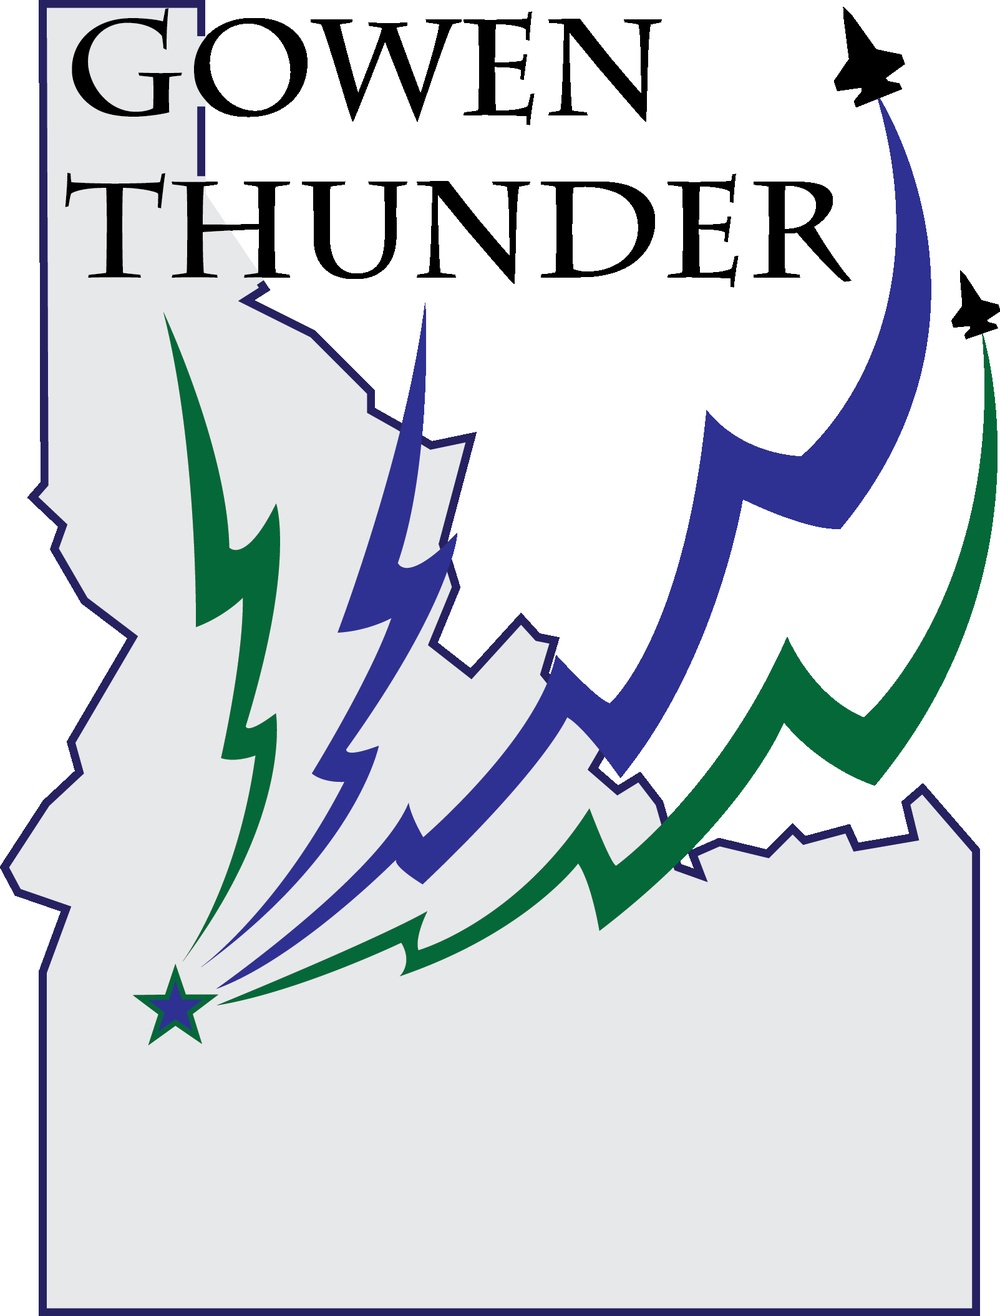 Gowen Thunder logo